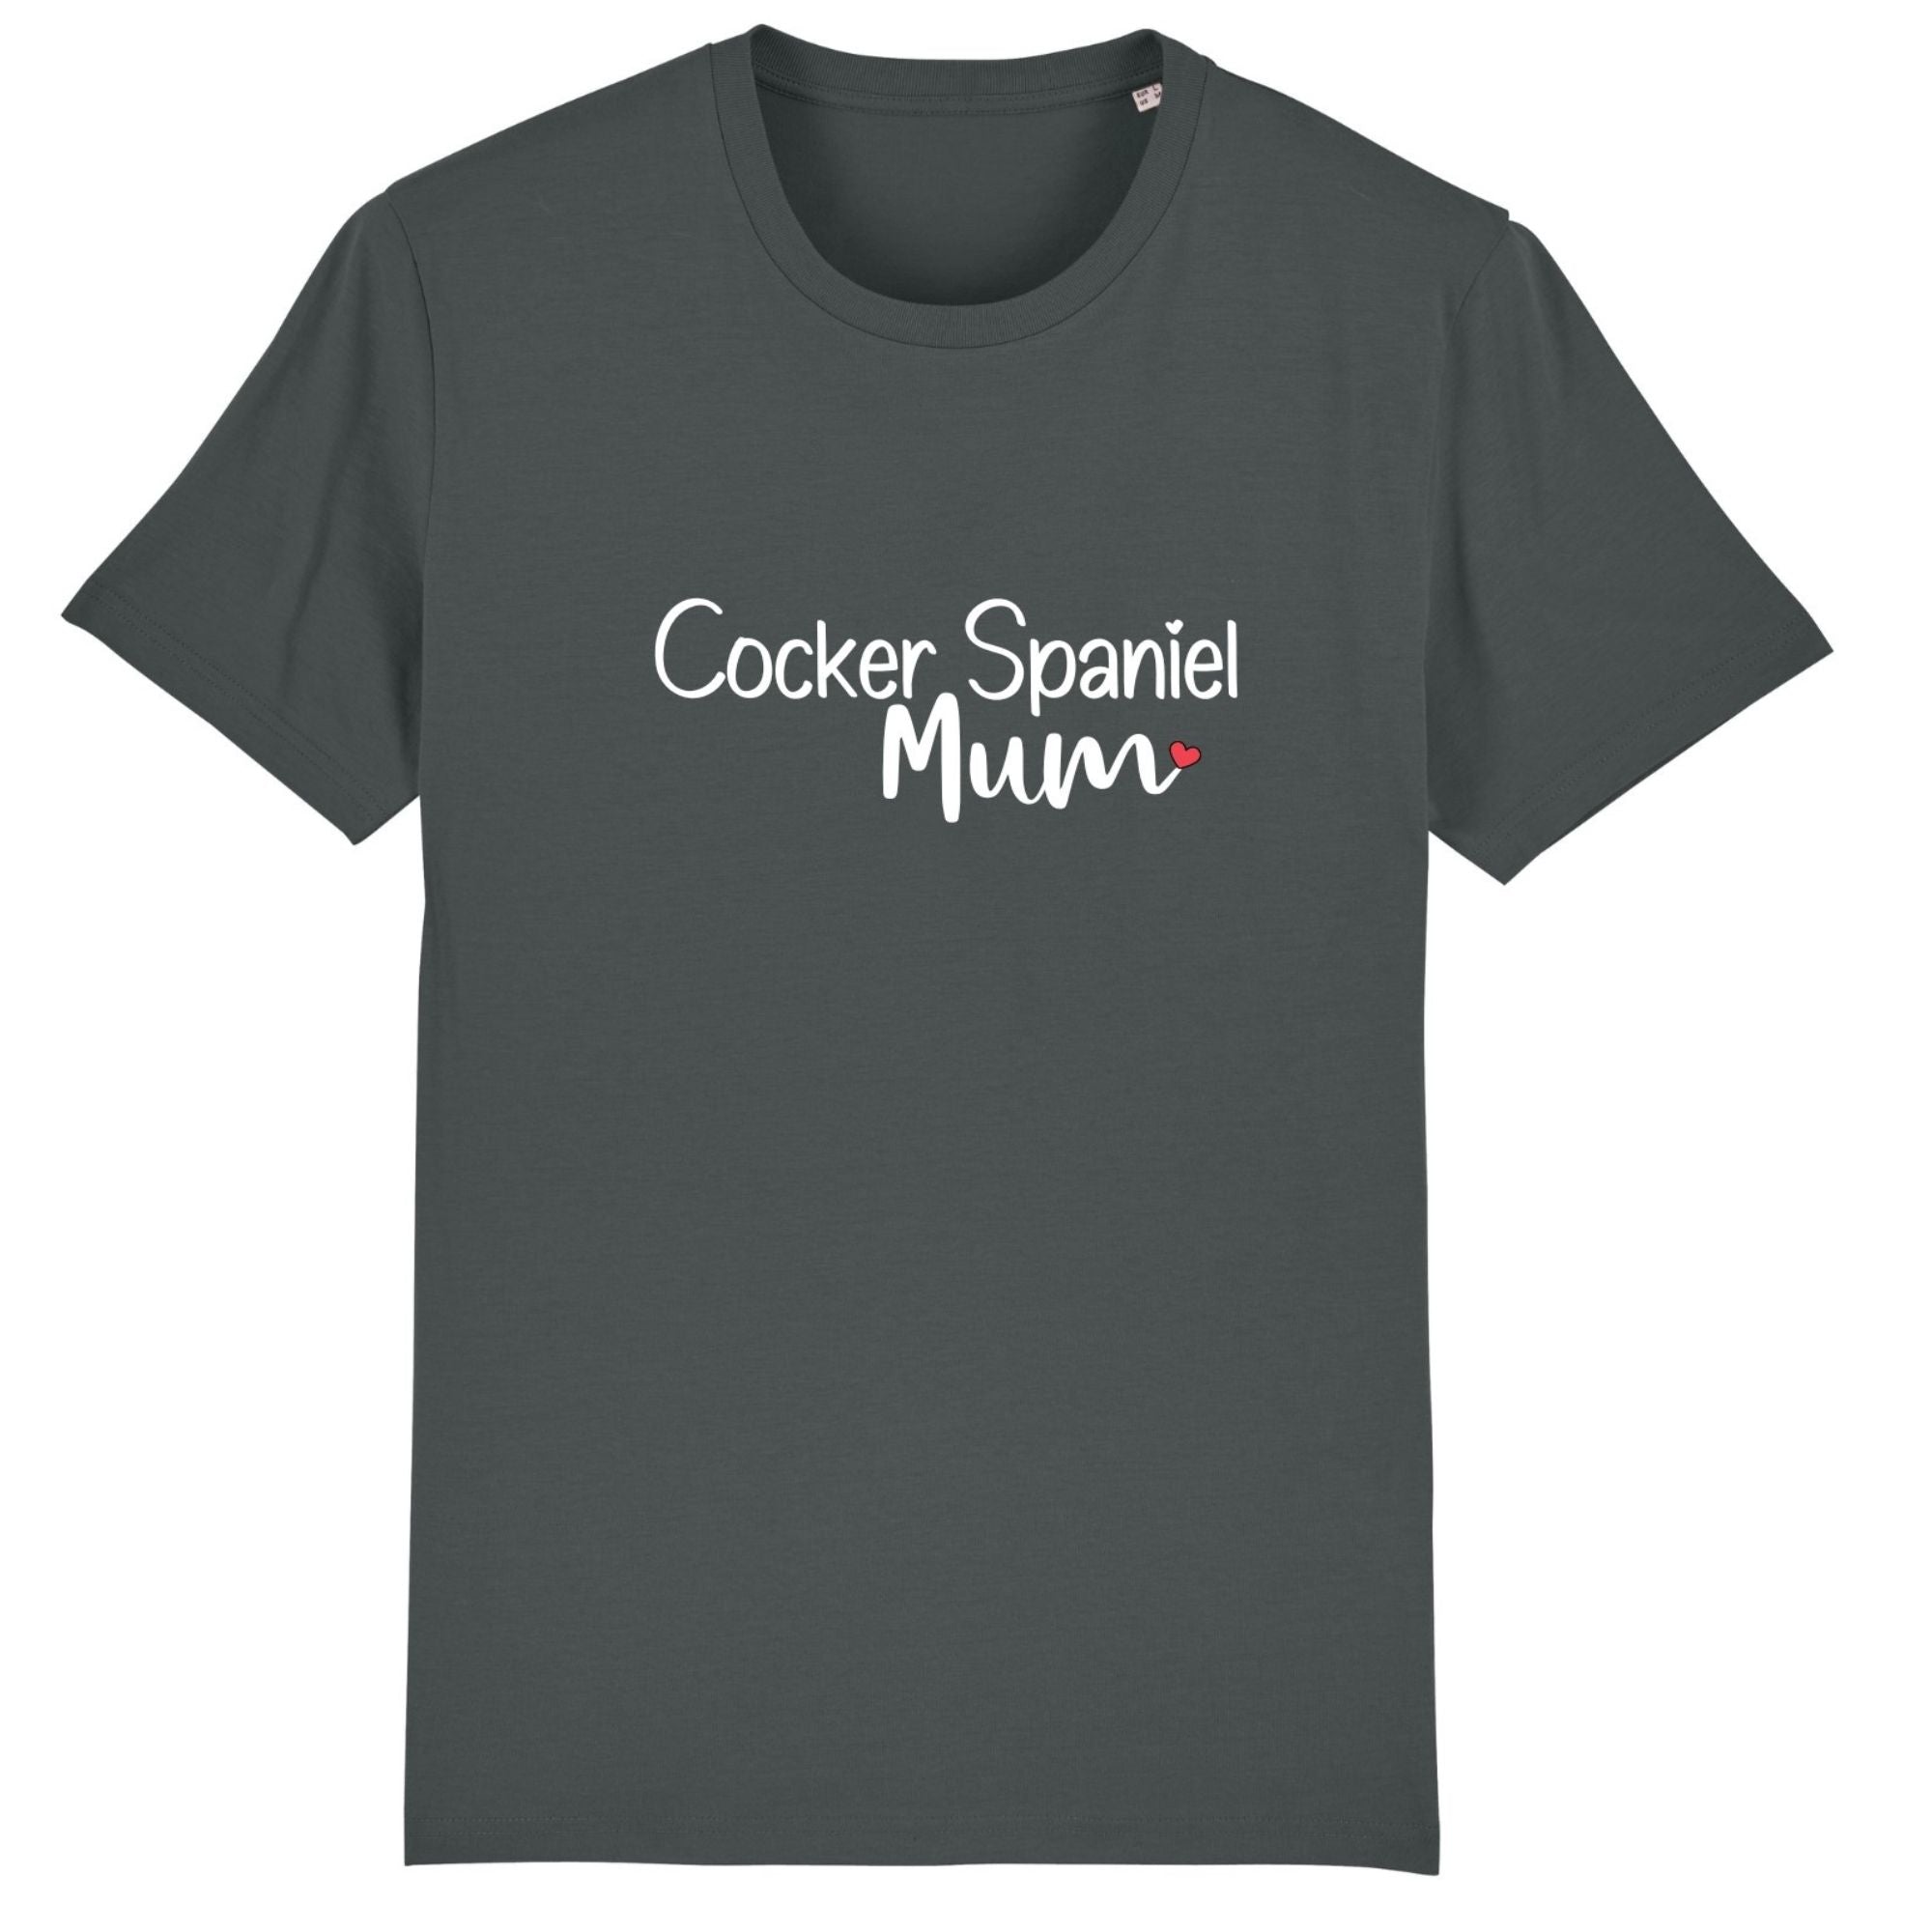 Cocker Spaniel Mum Organic T-Shirt - Sweetie